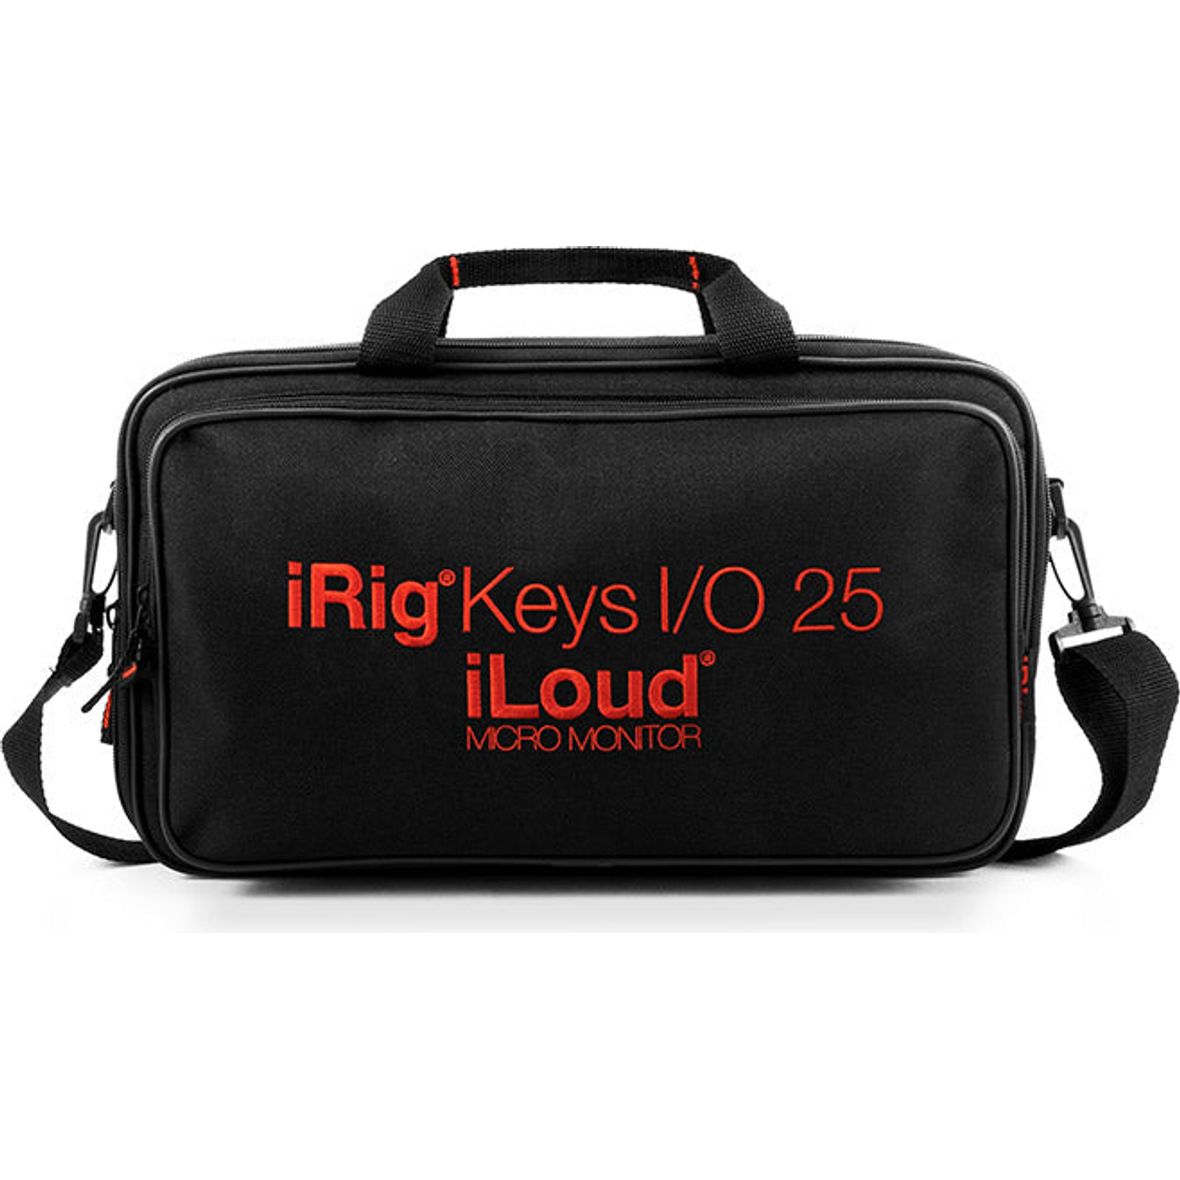 IK Multimedia Travel Bag for iRig Keys I/O 49